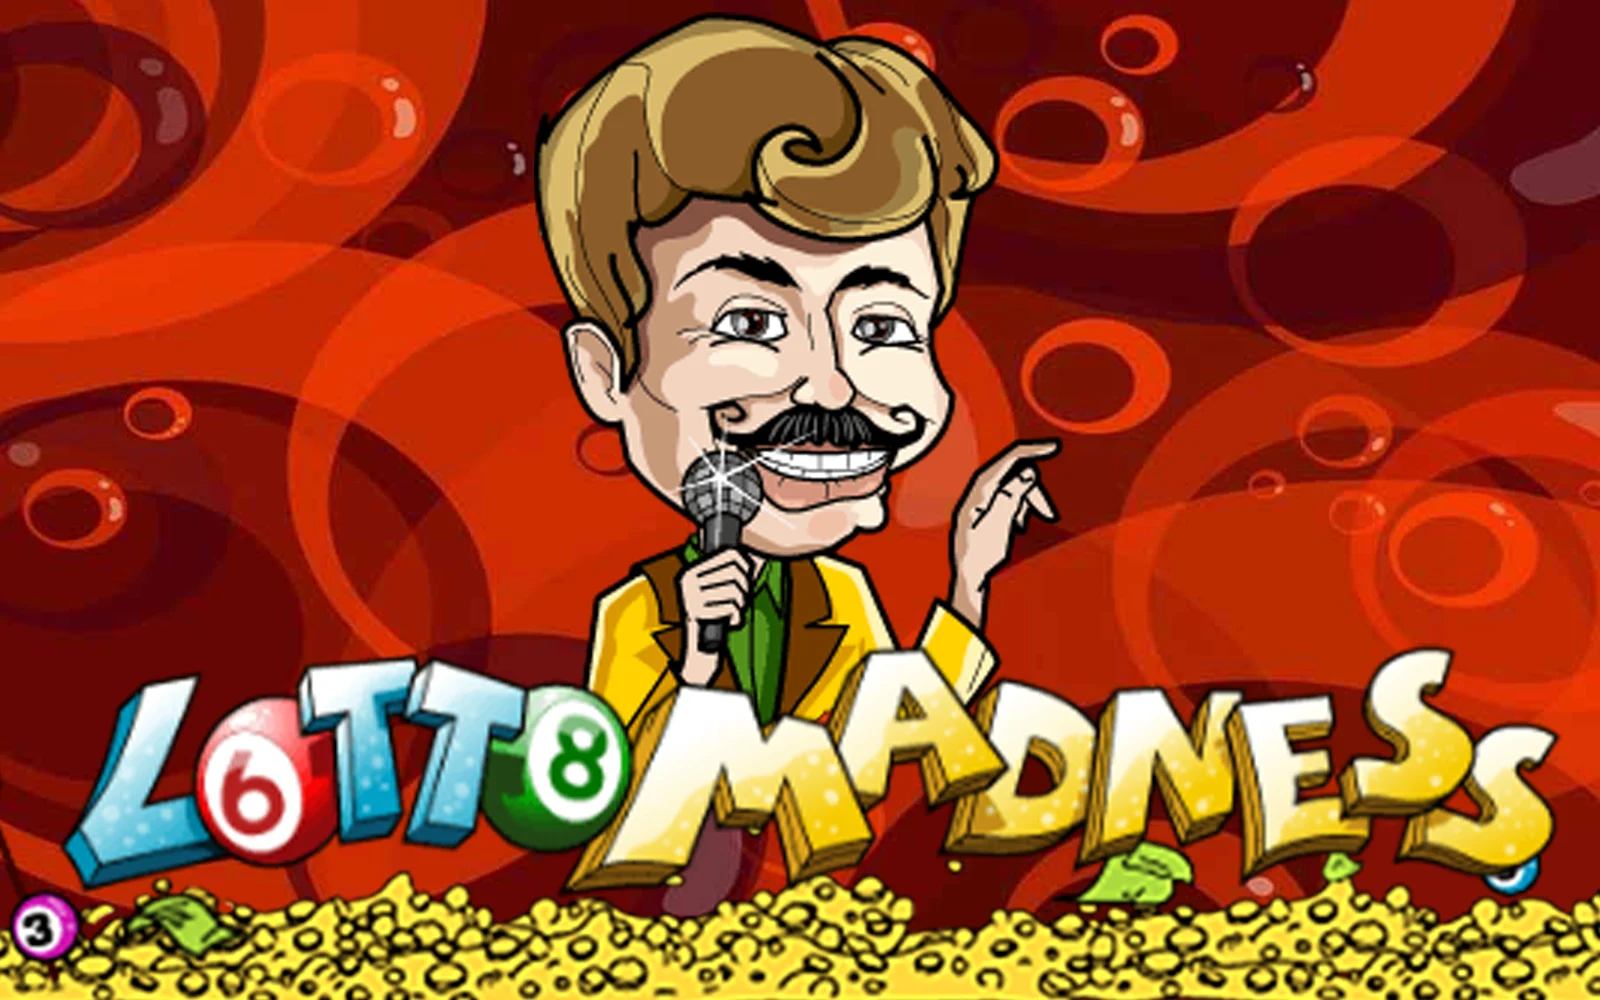 Play Lotto Madness on Starcasino.be online casino